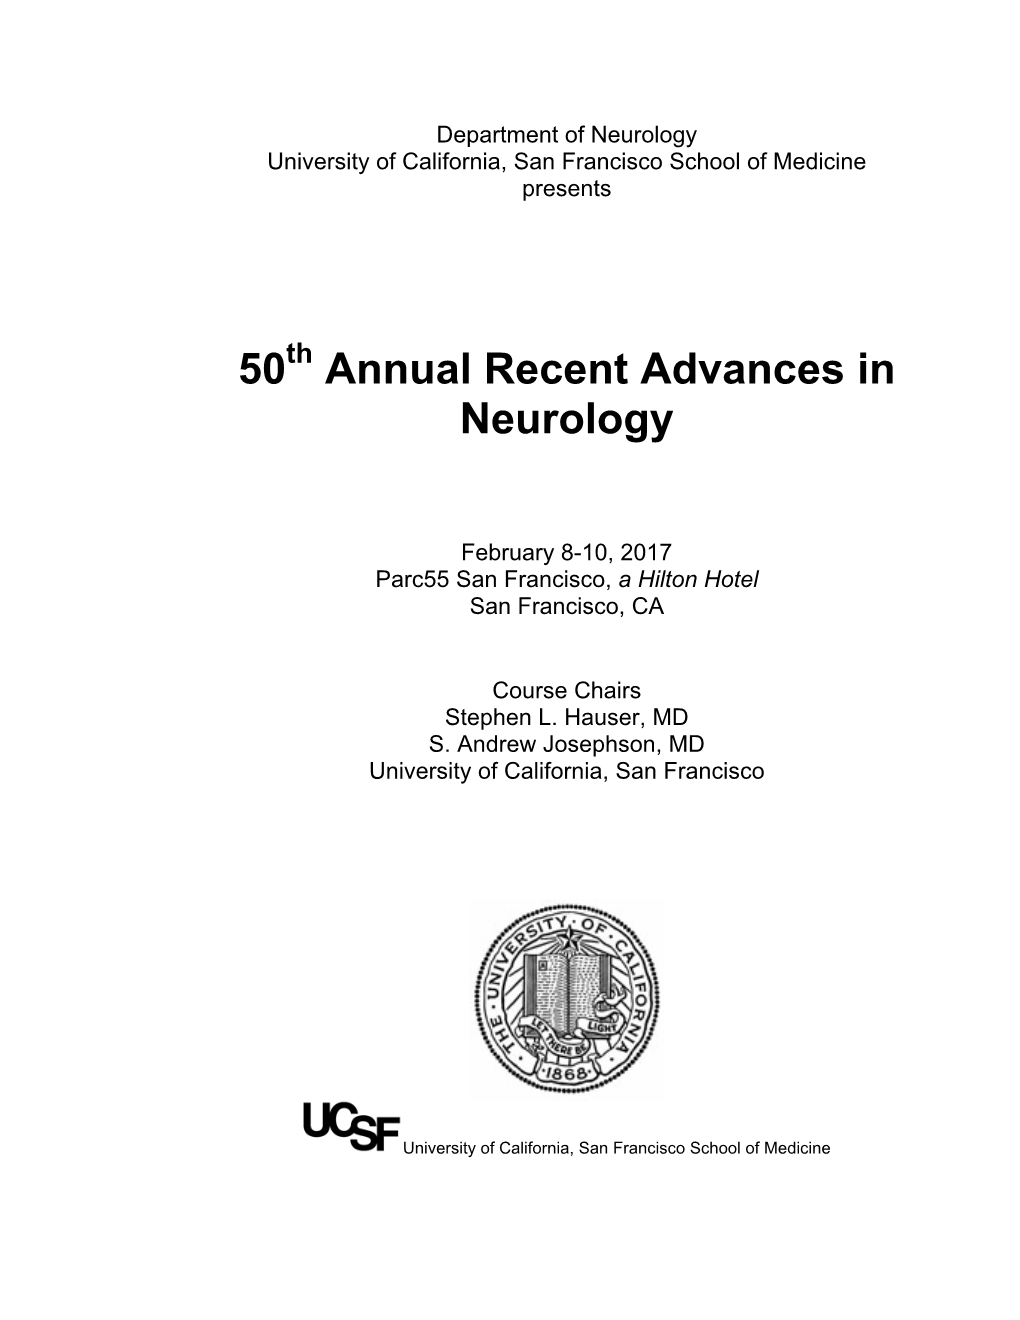 50 Annual Recent Advances in Neurology